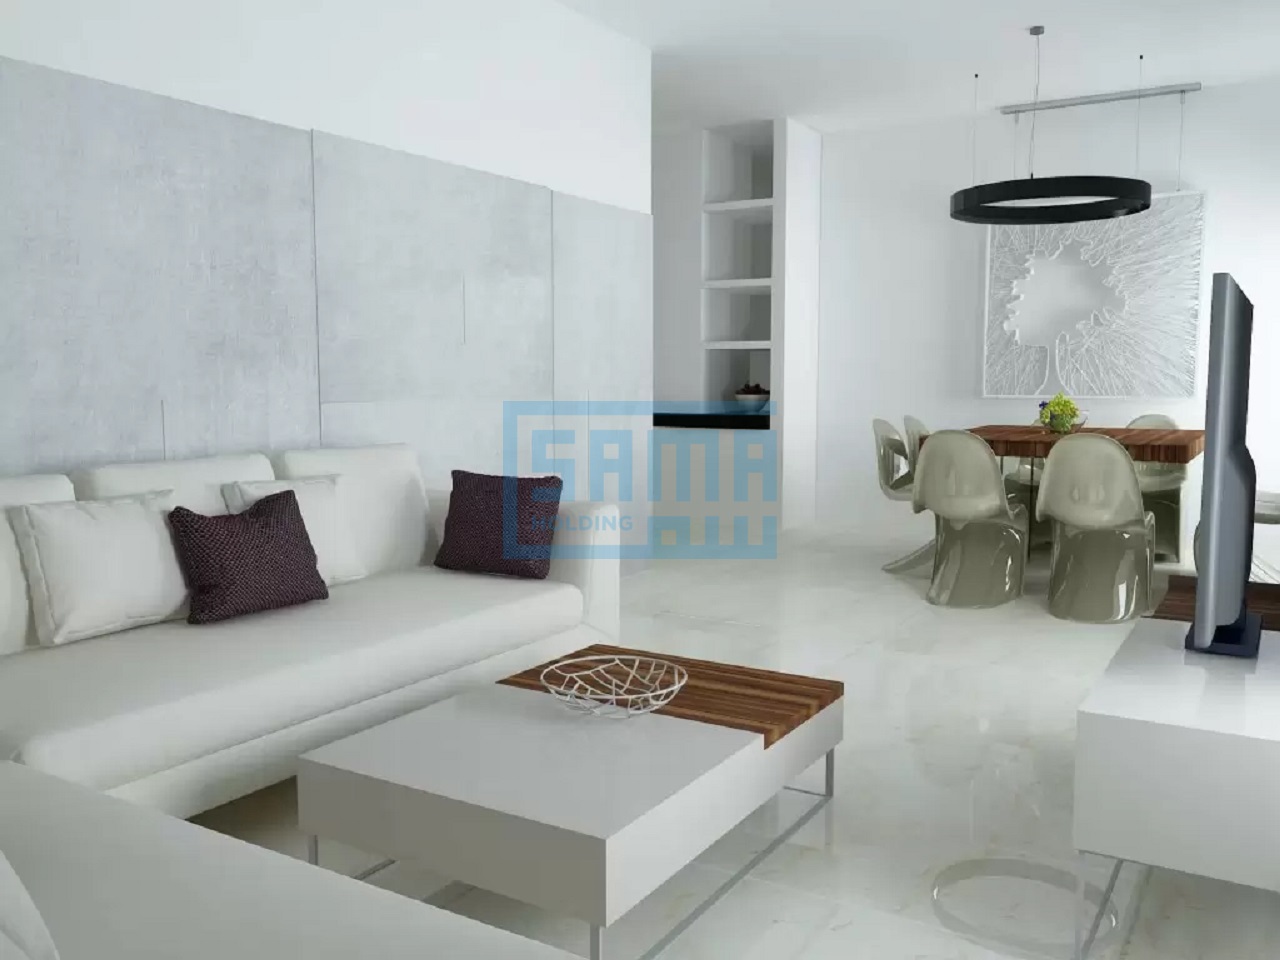 4 Bedrooms Apartment for Sale in Abu Dhabi, Al Raha Beach - Under Construction